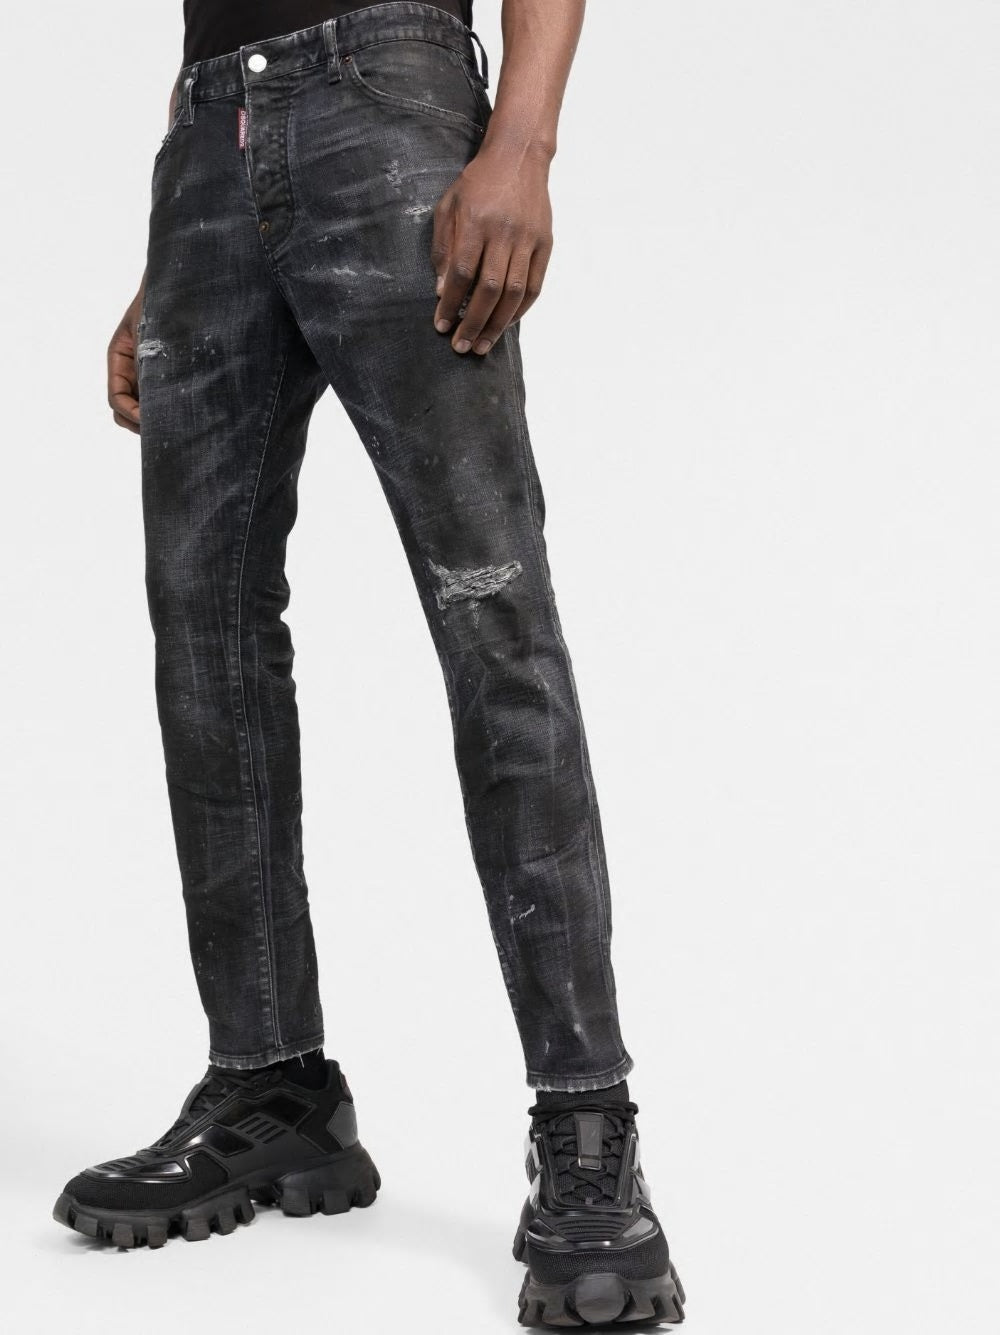 DSQUARED2 Black 5 Pocket Pants for Men - FW22 Collection